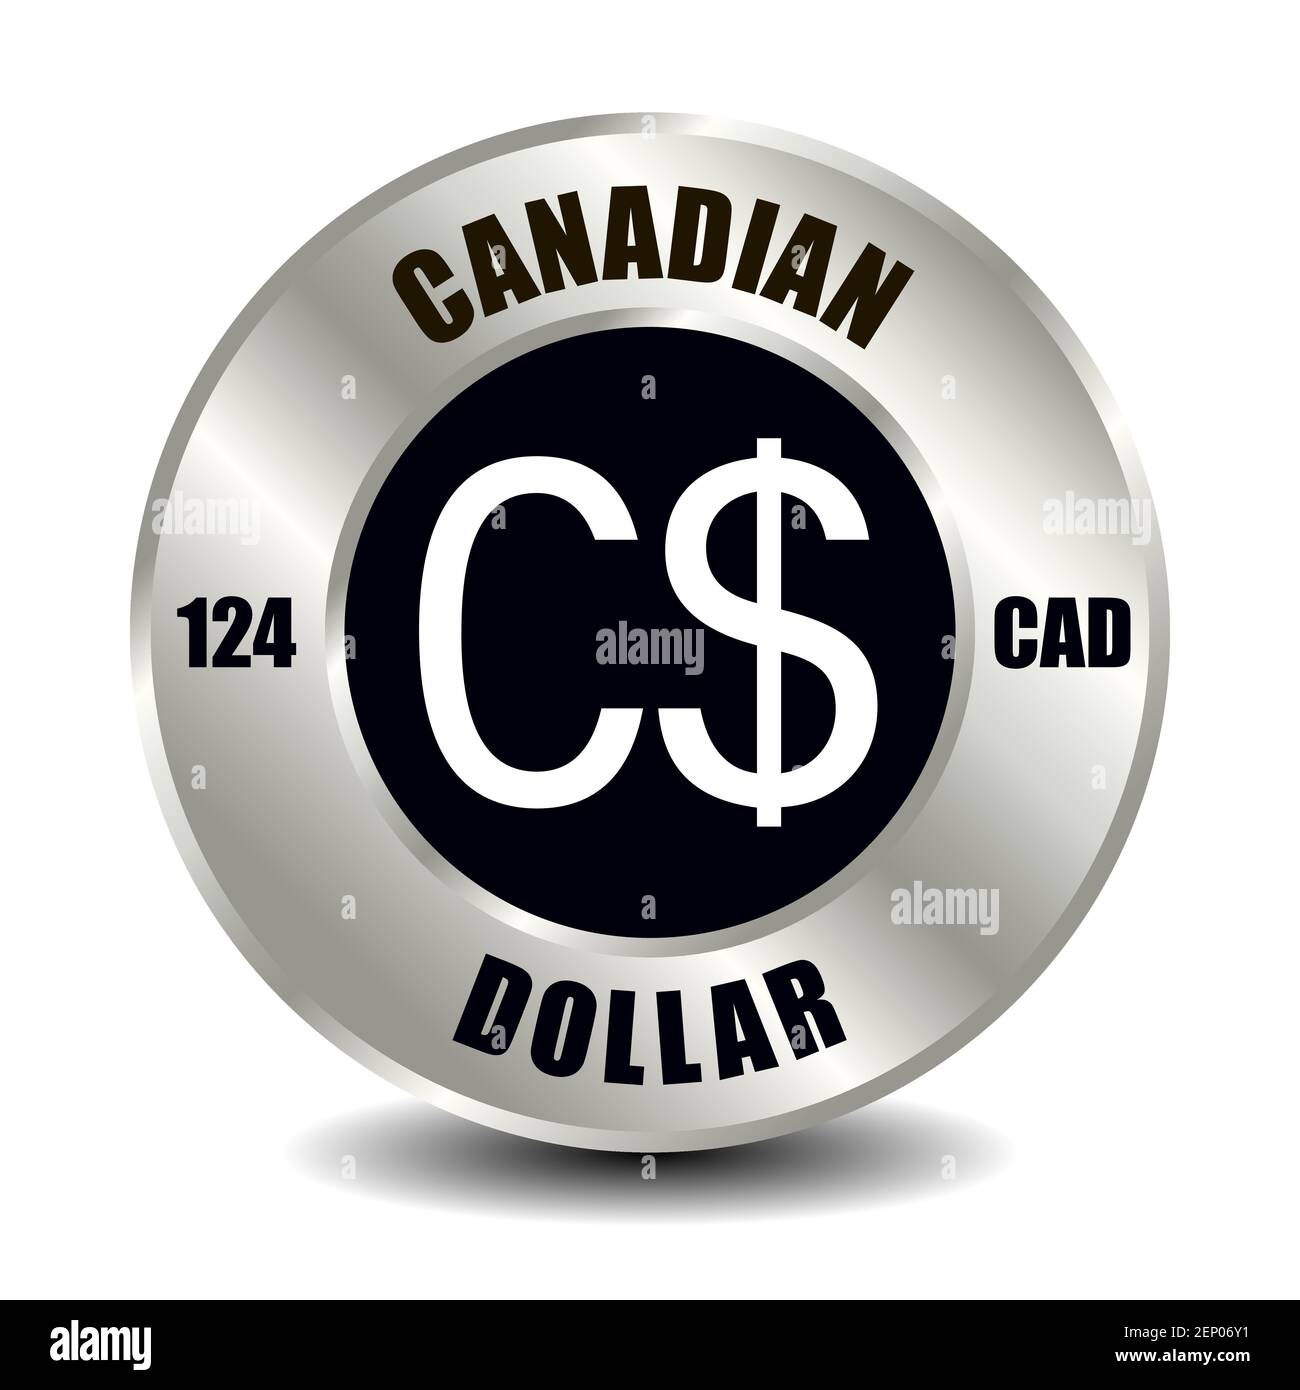 All about Canadian Dolllar (abbreviation, symbol, history)